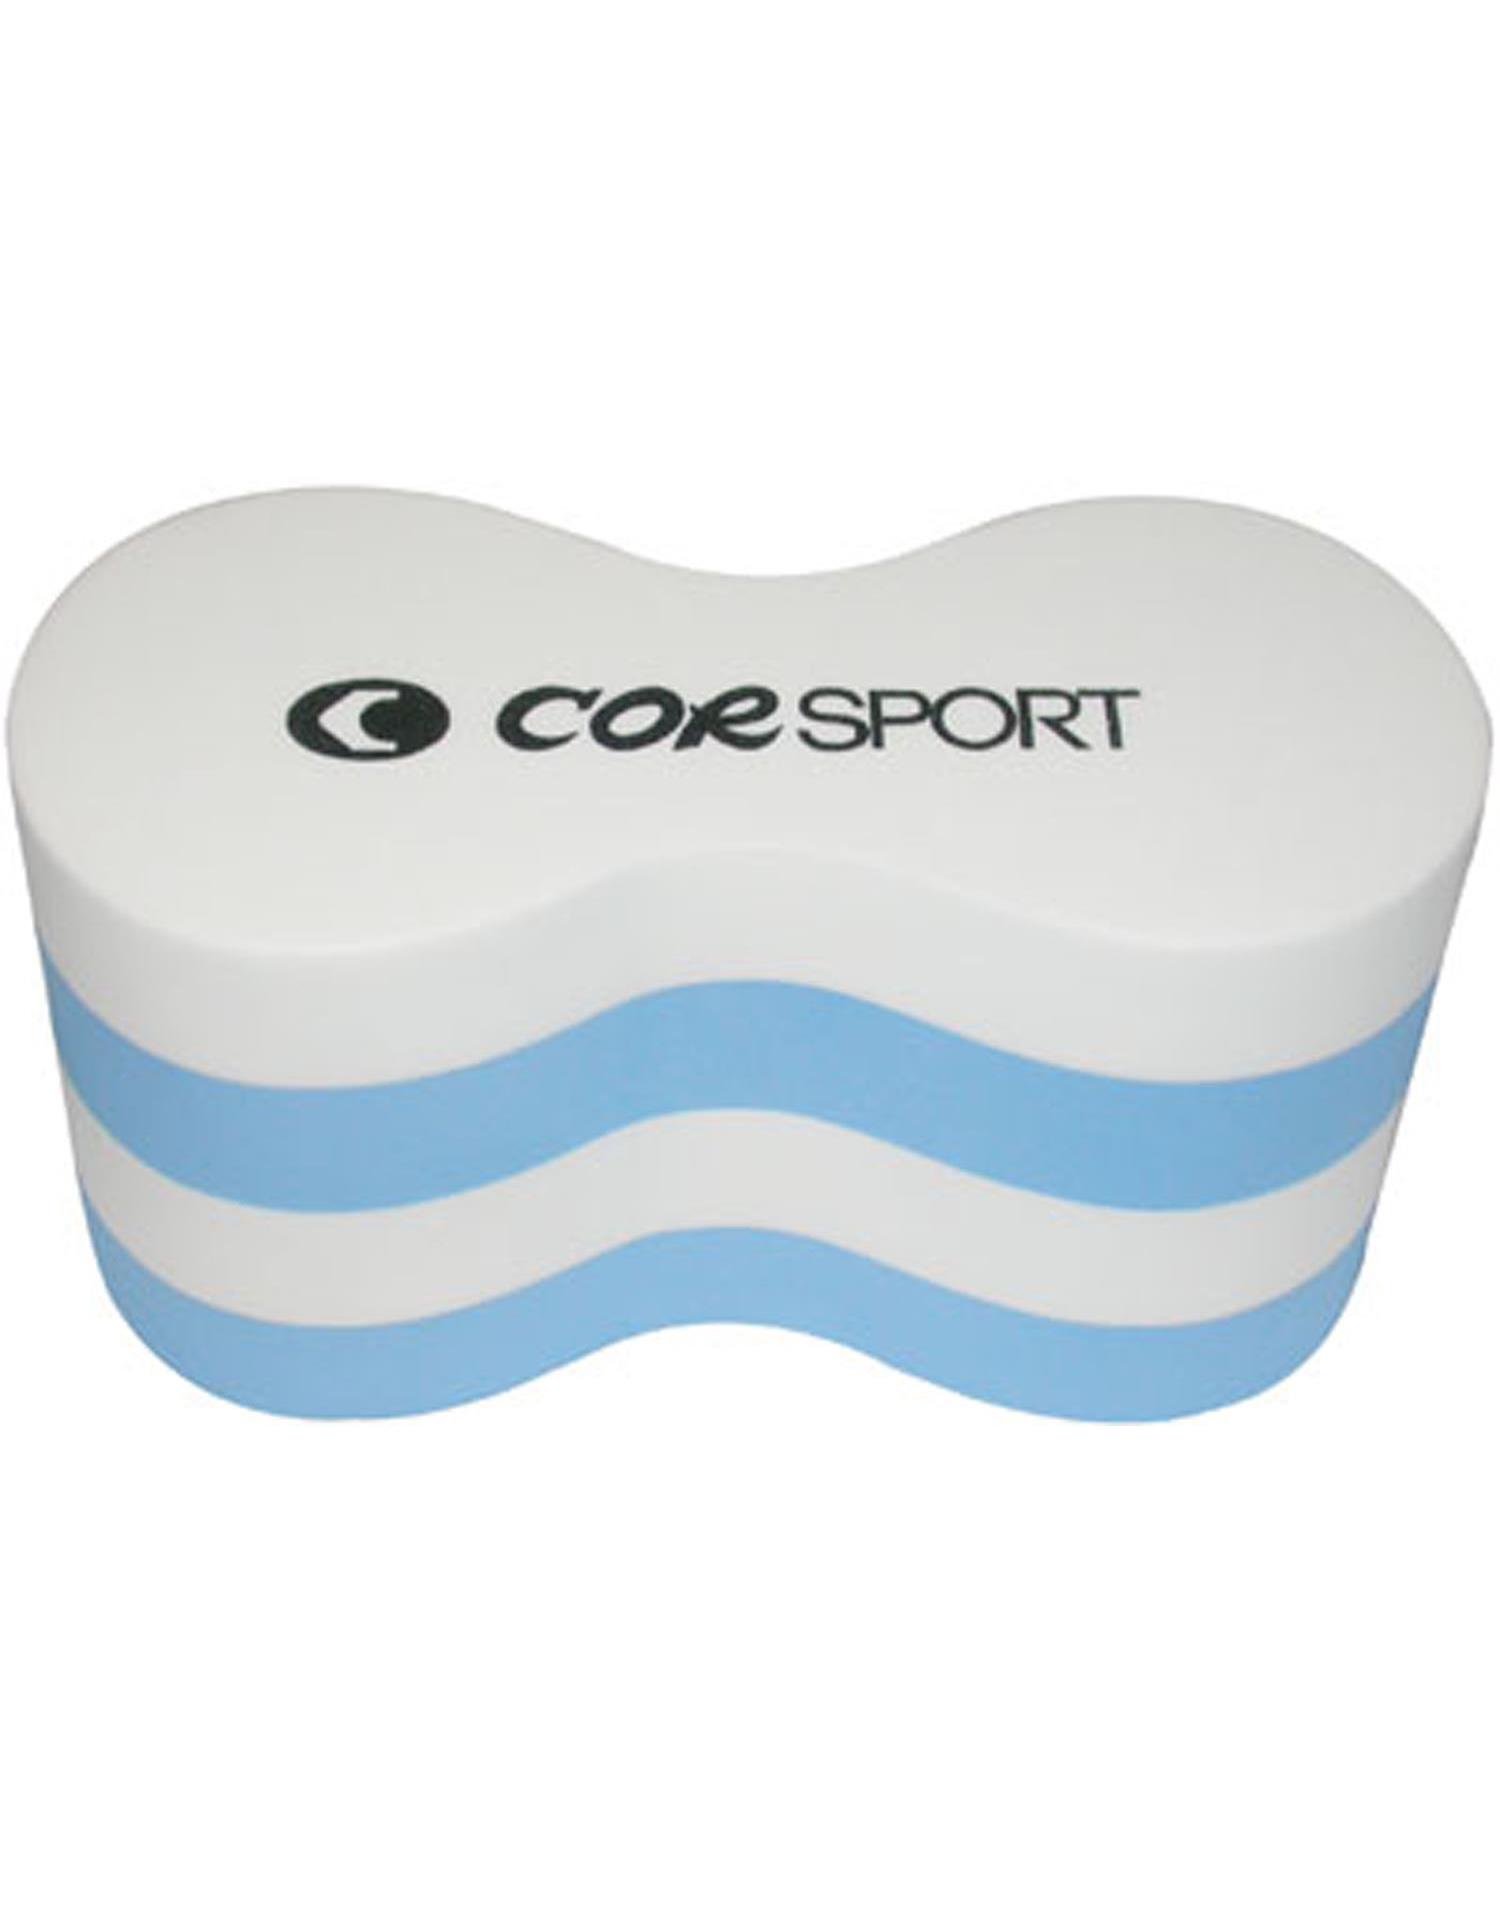 Cor Sport Pool Buoy in E.V.A.